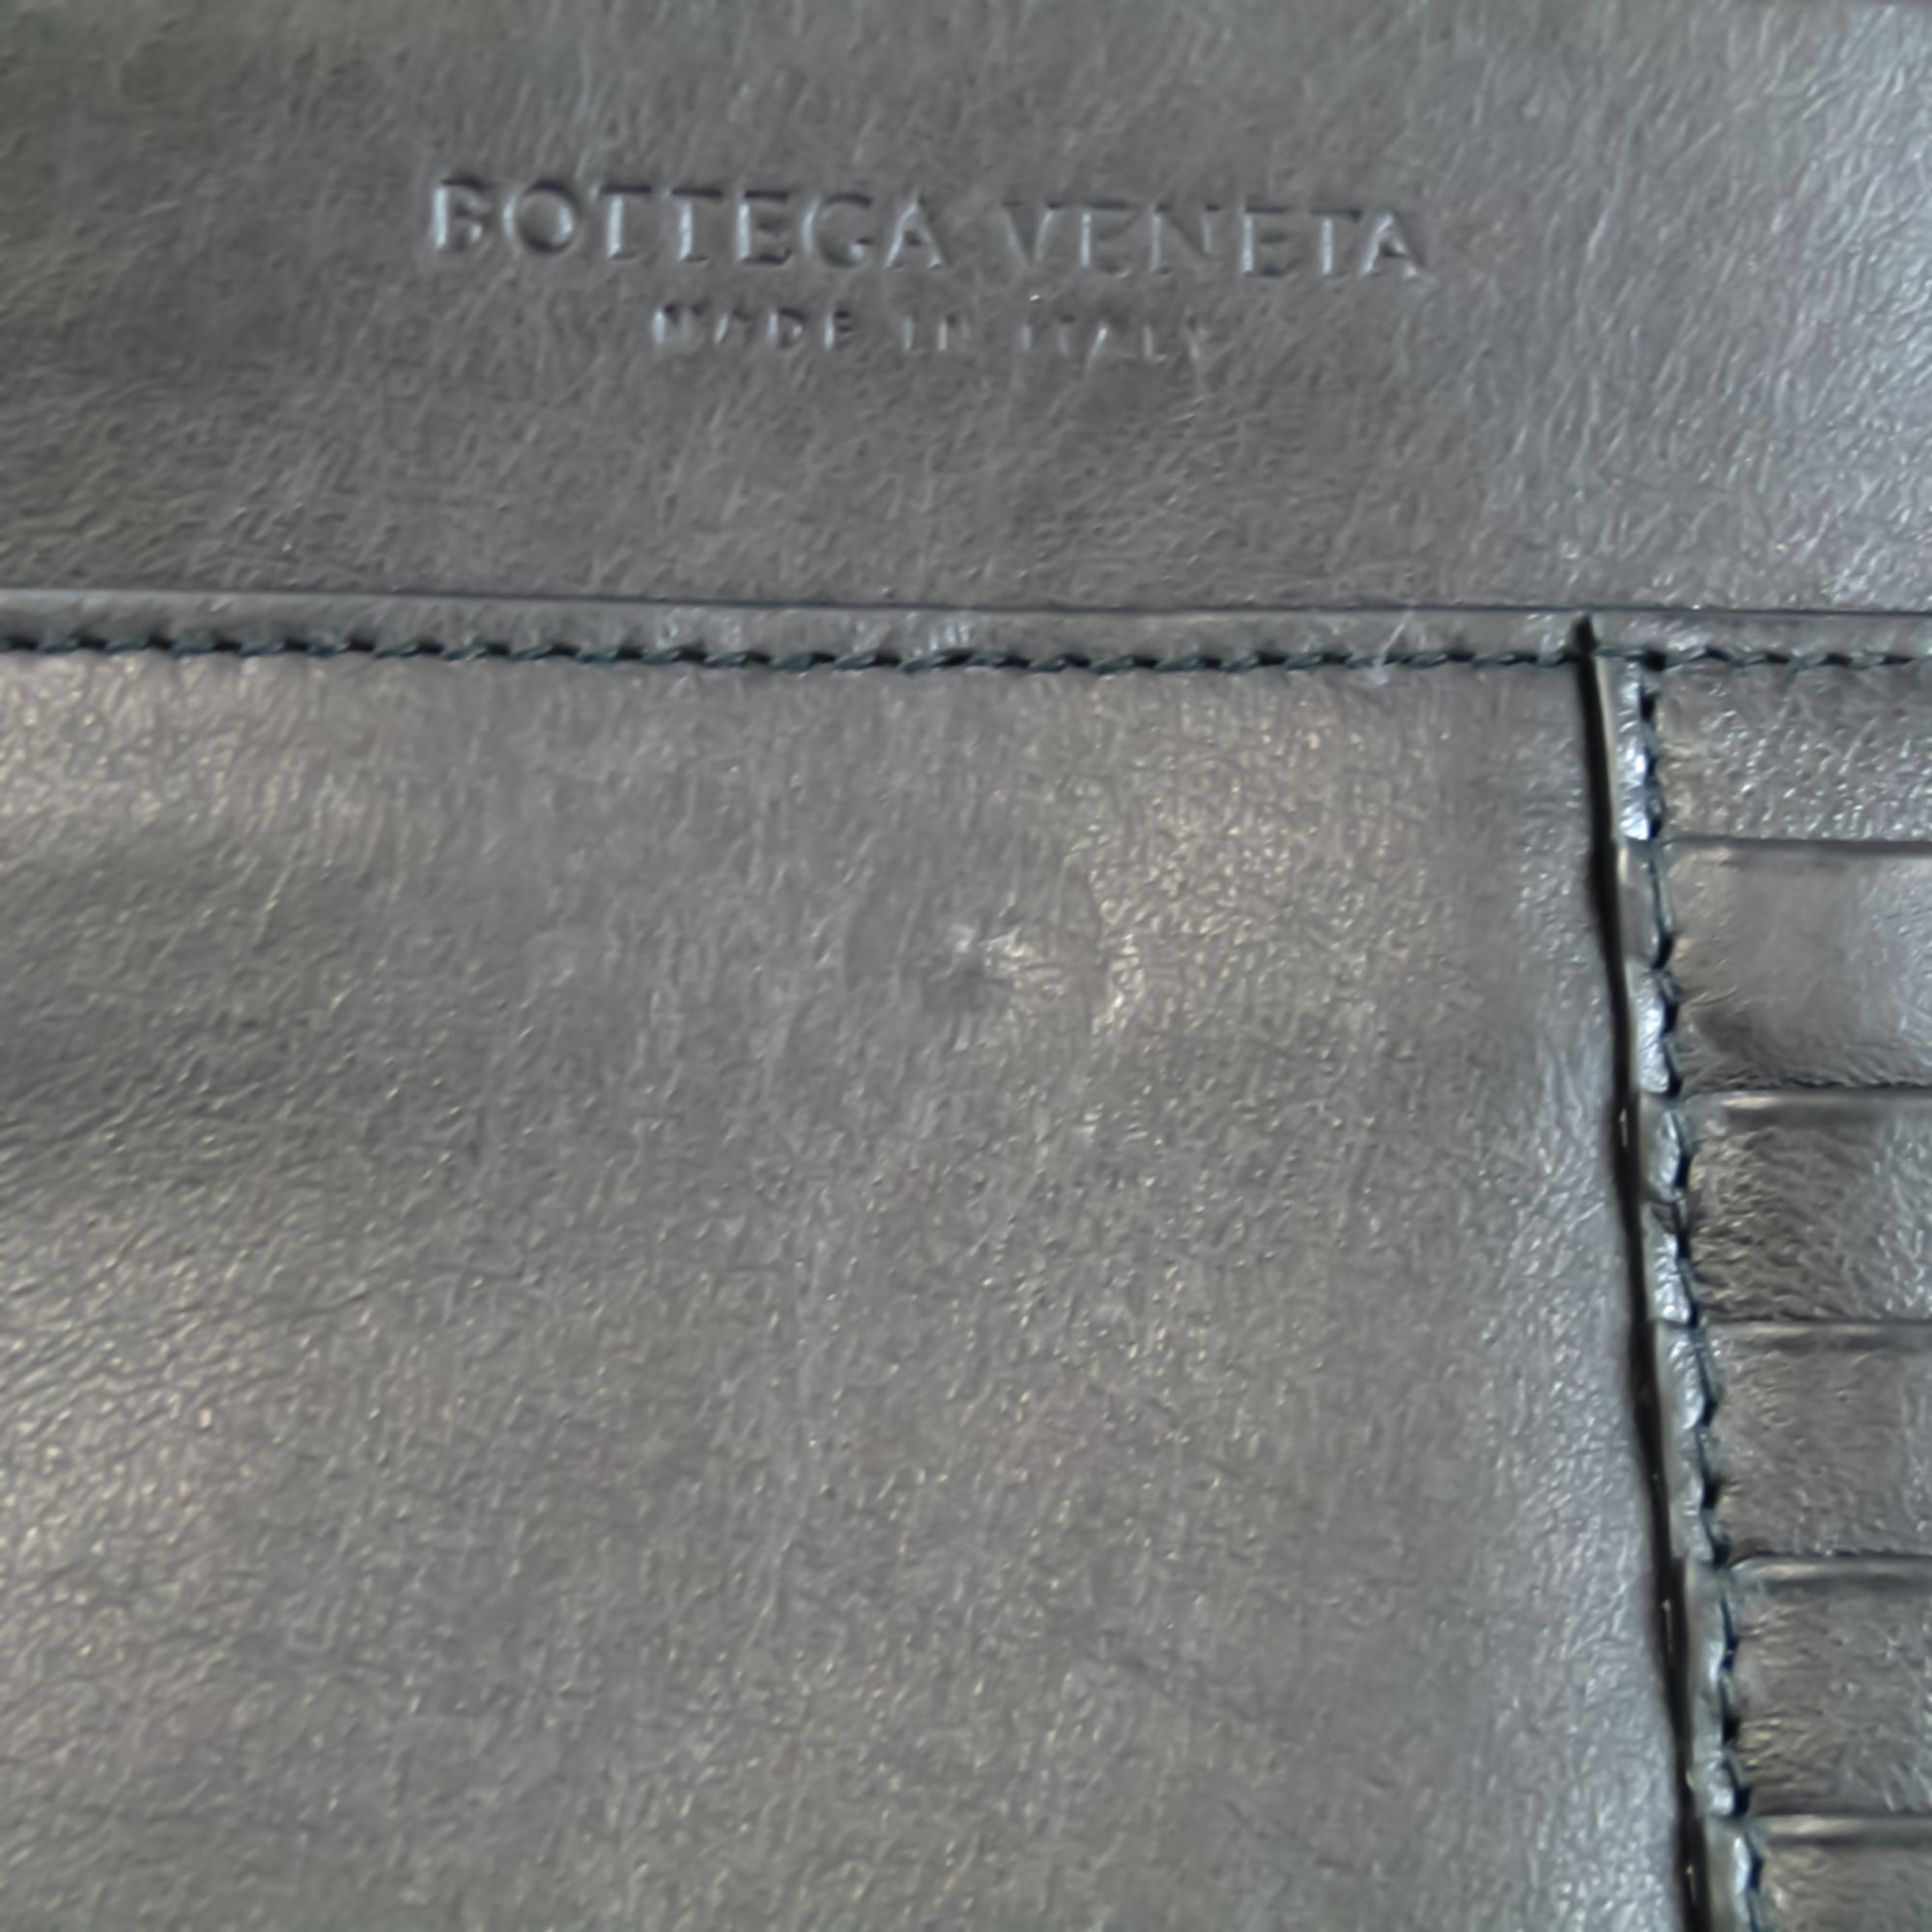 Bottega Veneta Marco Polo Document 580472 VMAW1 Men's Leather Clutch Bag Black